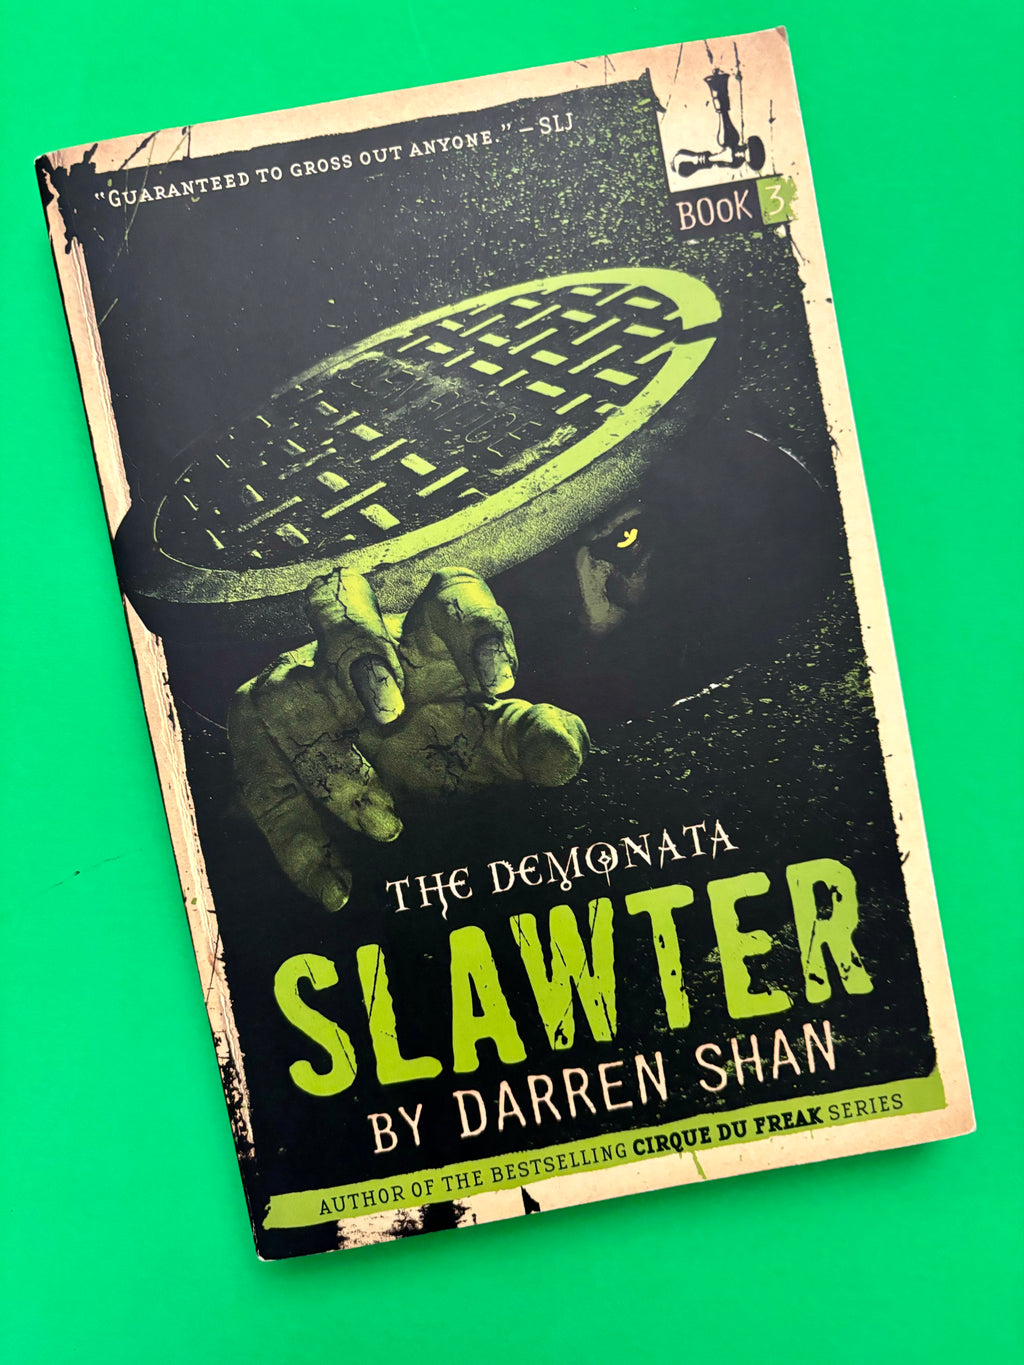 The Demonata Book 3: Slawter- By Darren Shan